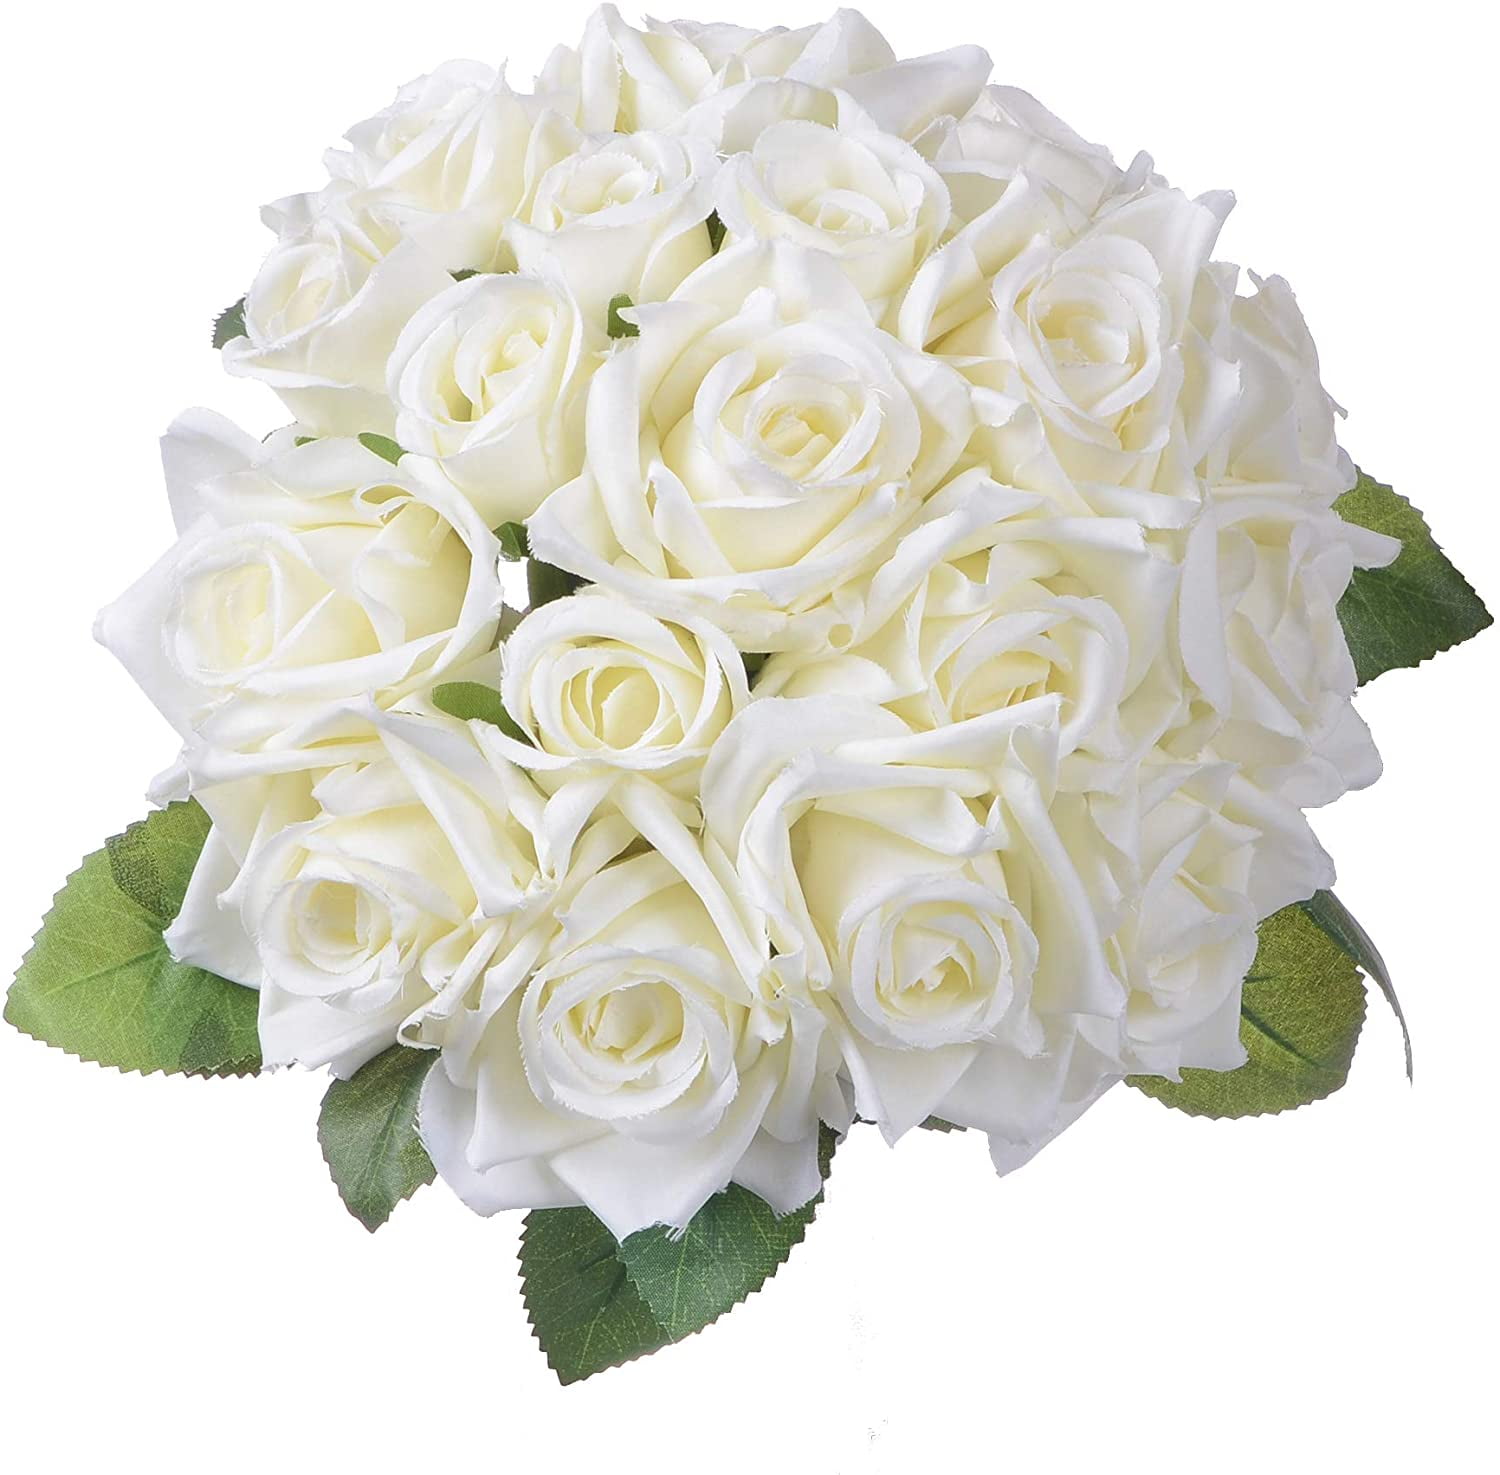 18 Heads Silk Rose Artificial Flowers Fake Bouquet Wedding Home Party Decor BD 